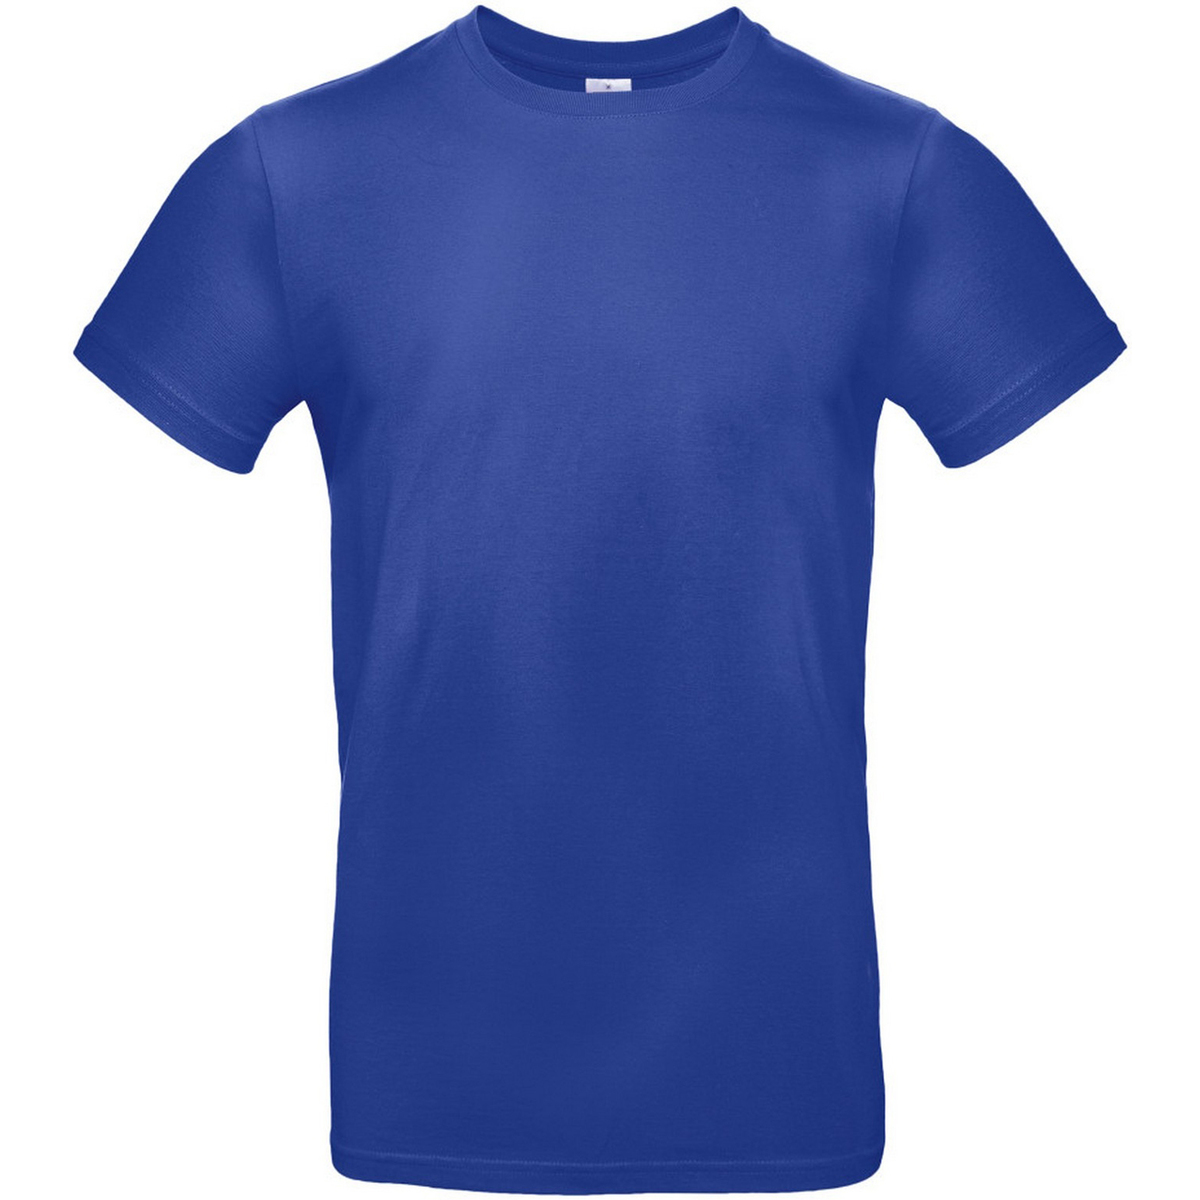 Vêtements Homme T-shirts manches longues B And C TU03T Bleu